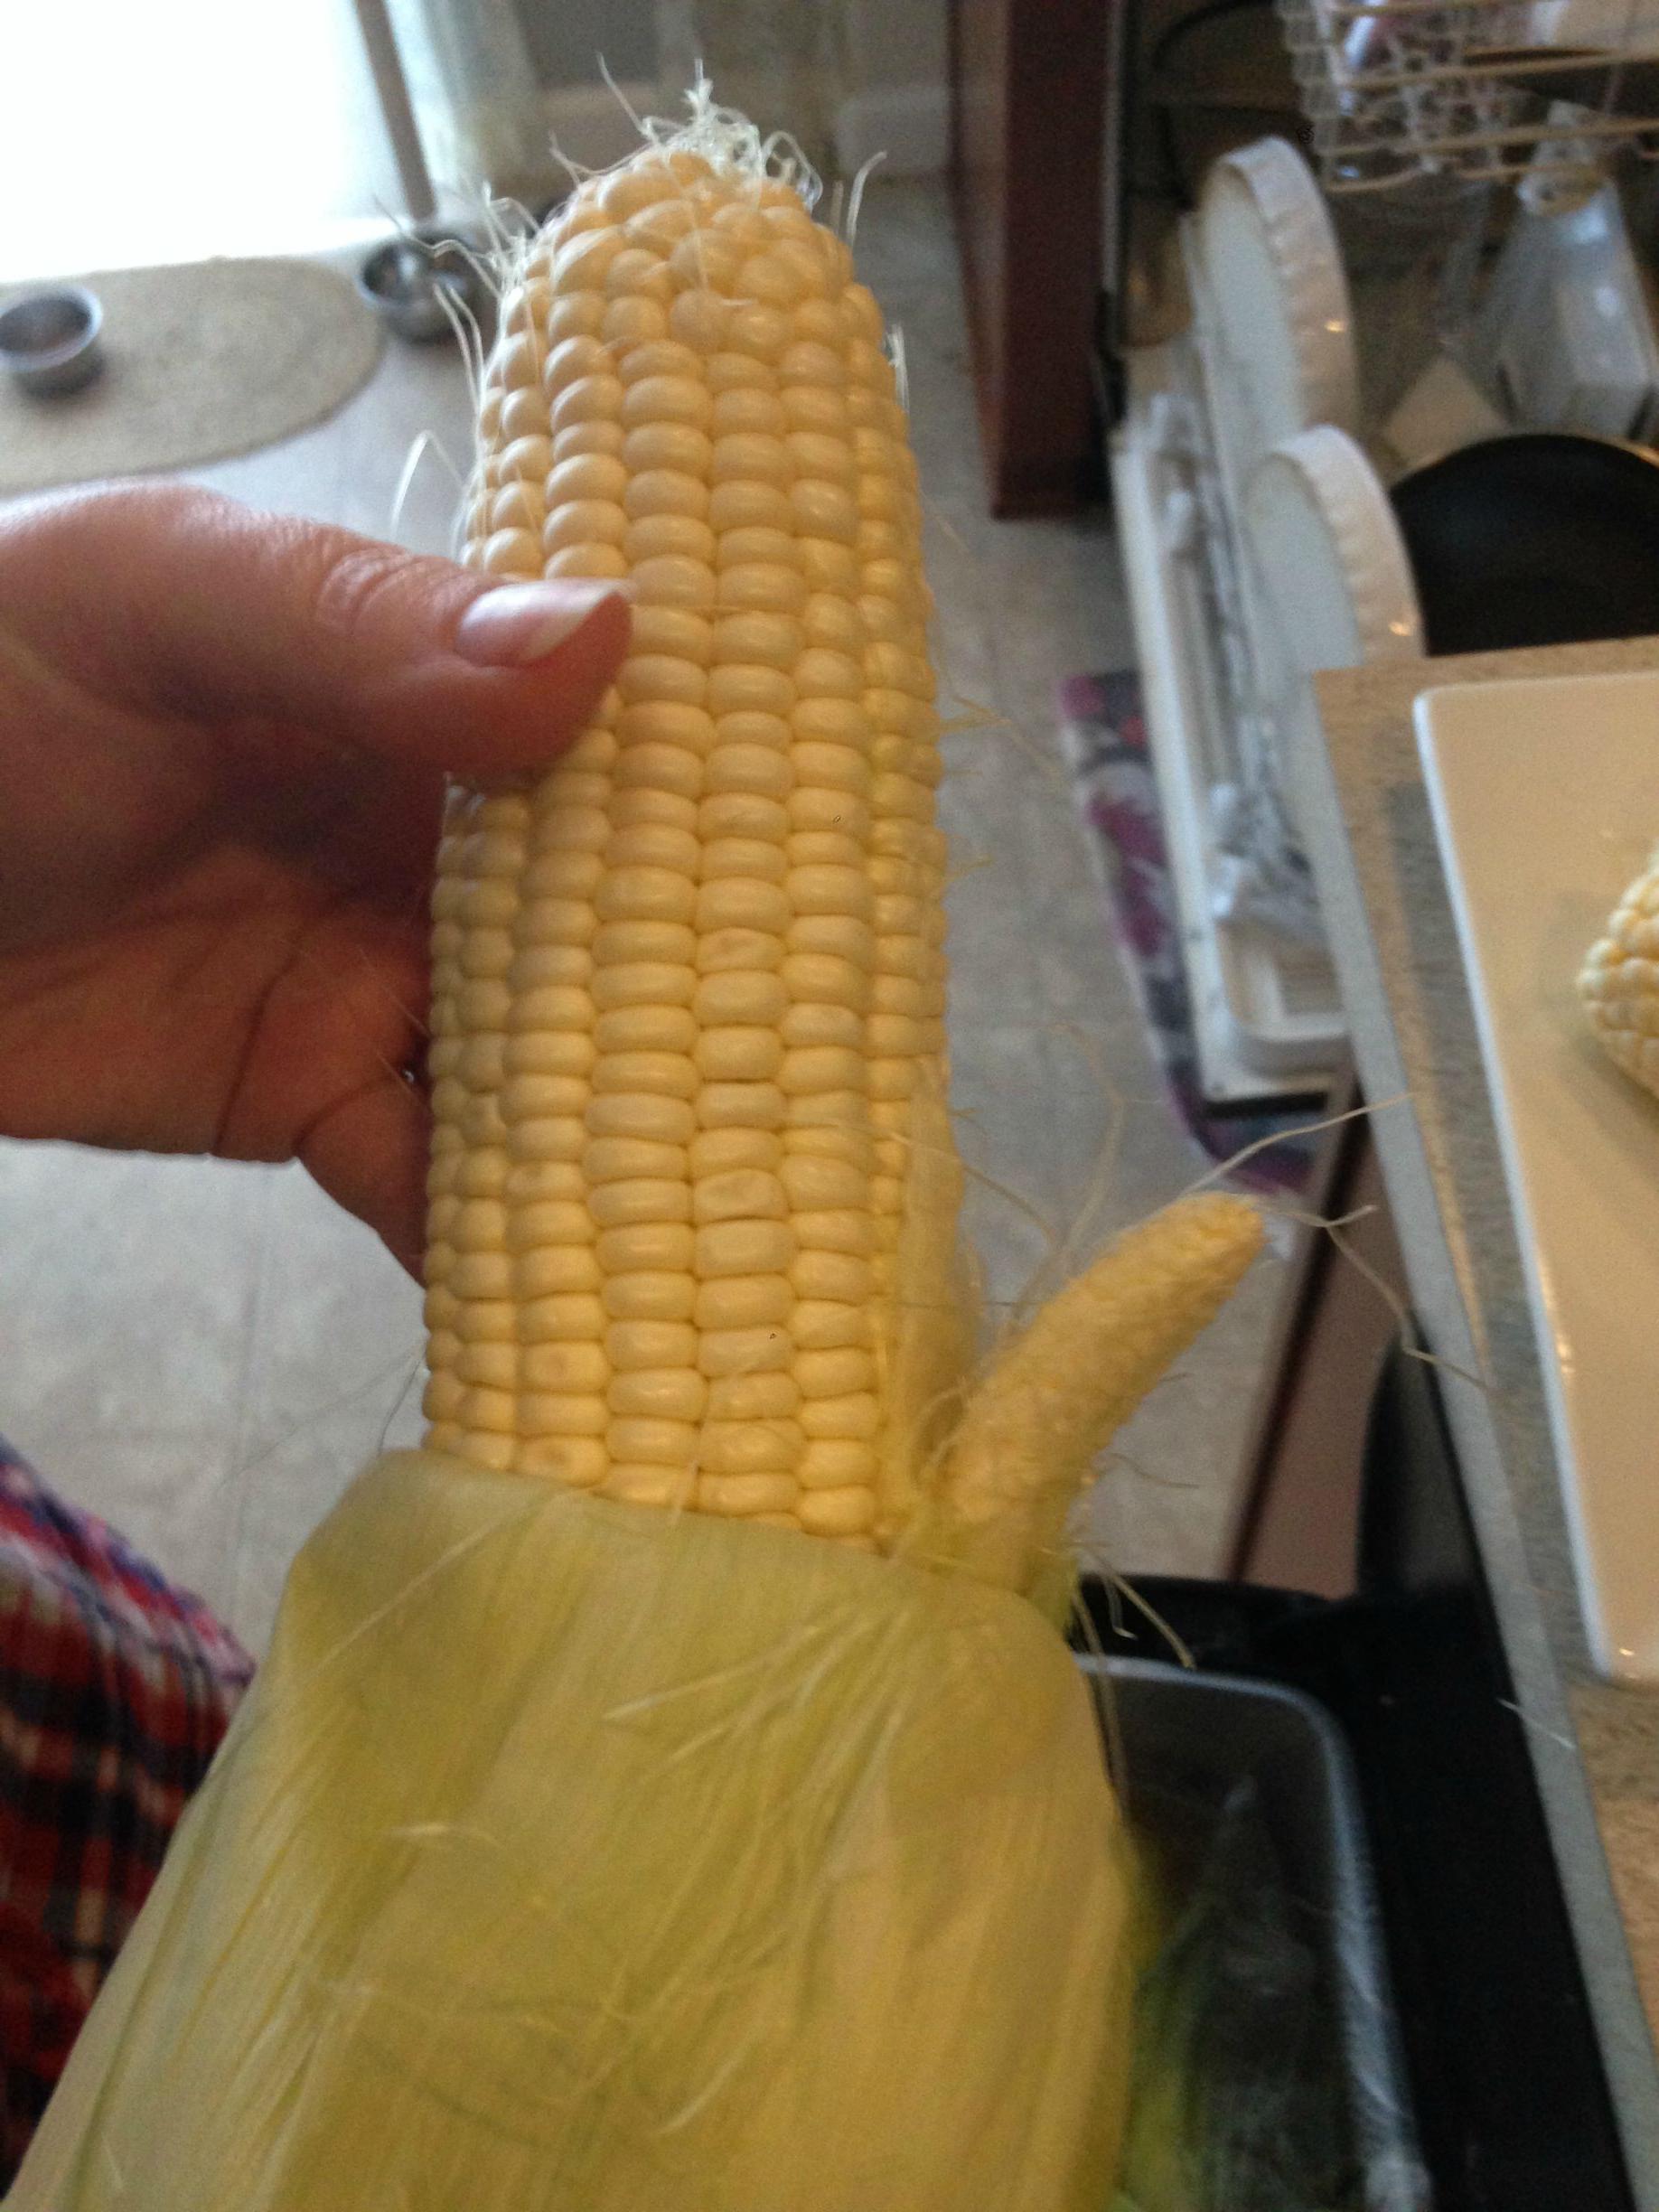 My corn has a penis. - Imgur